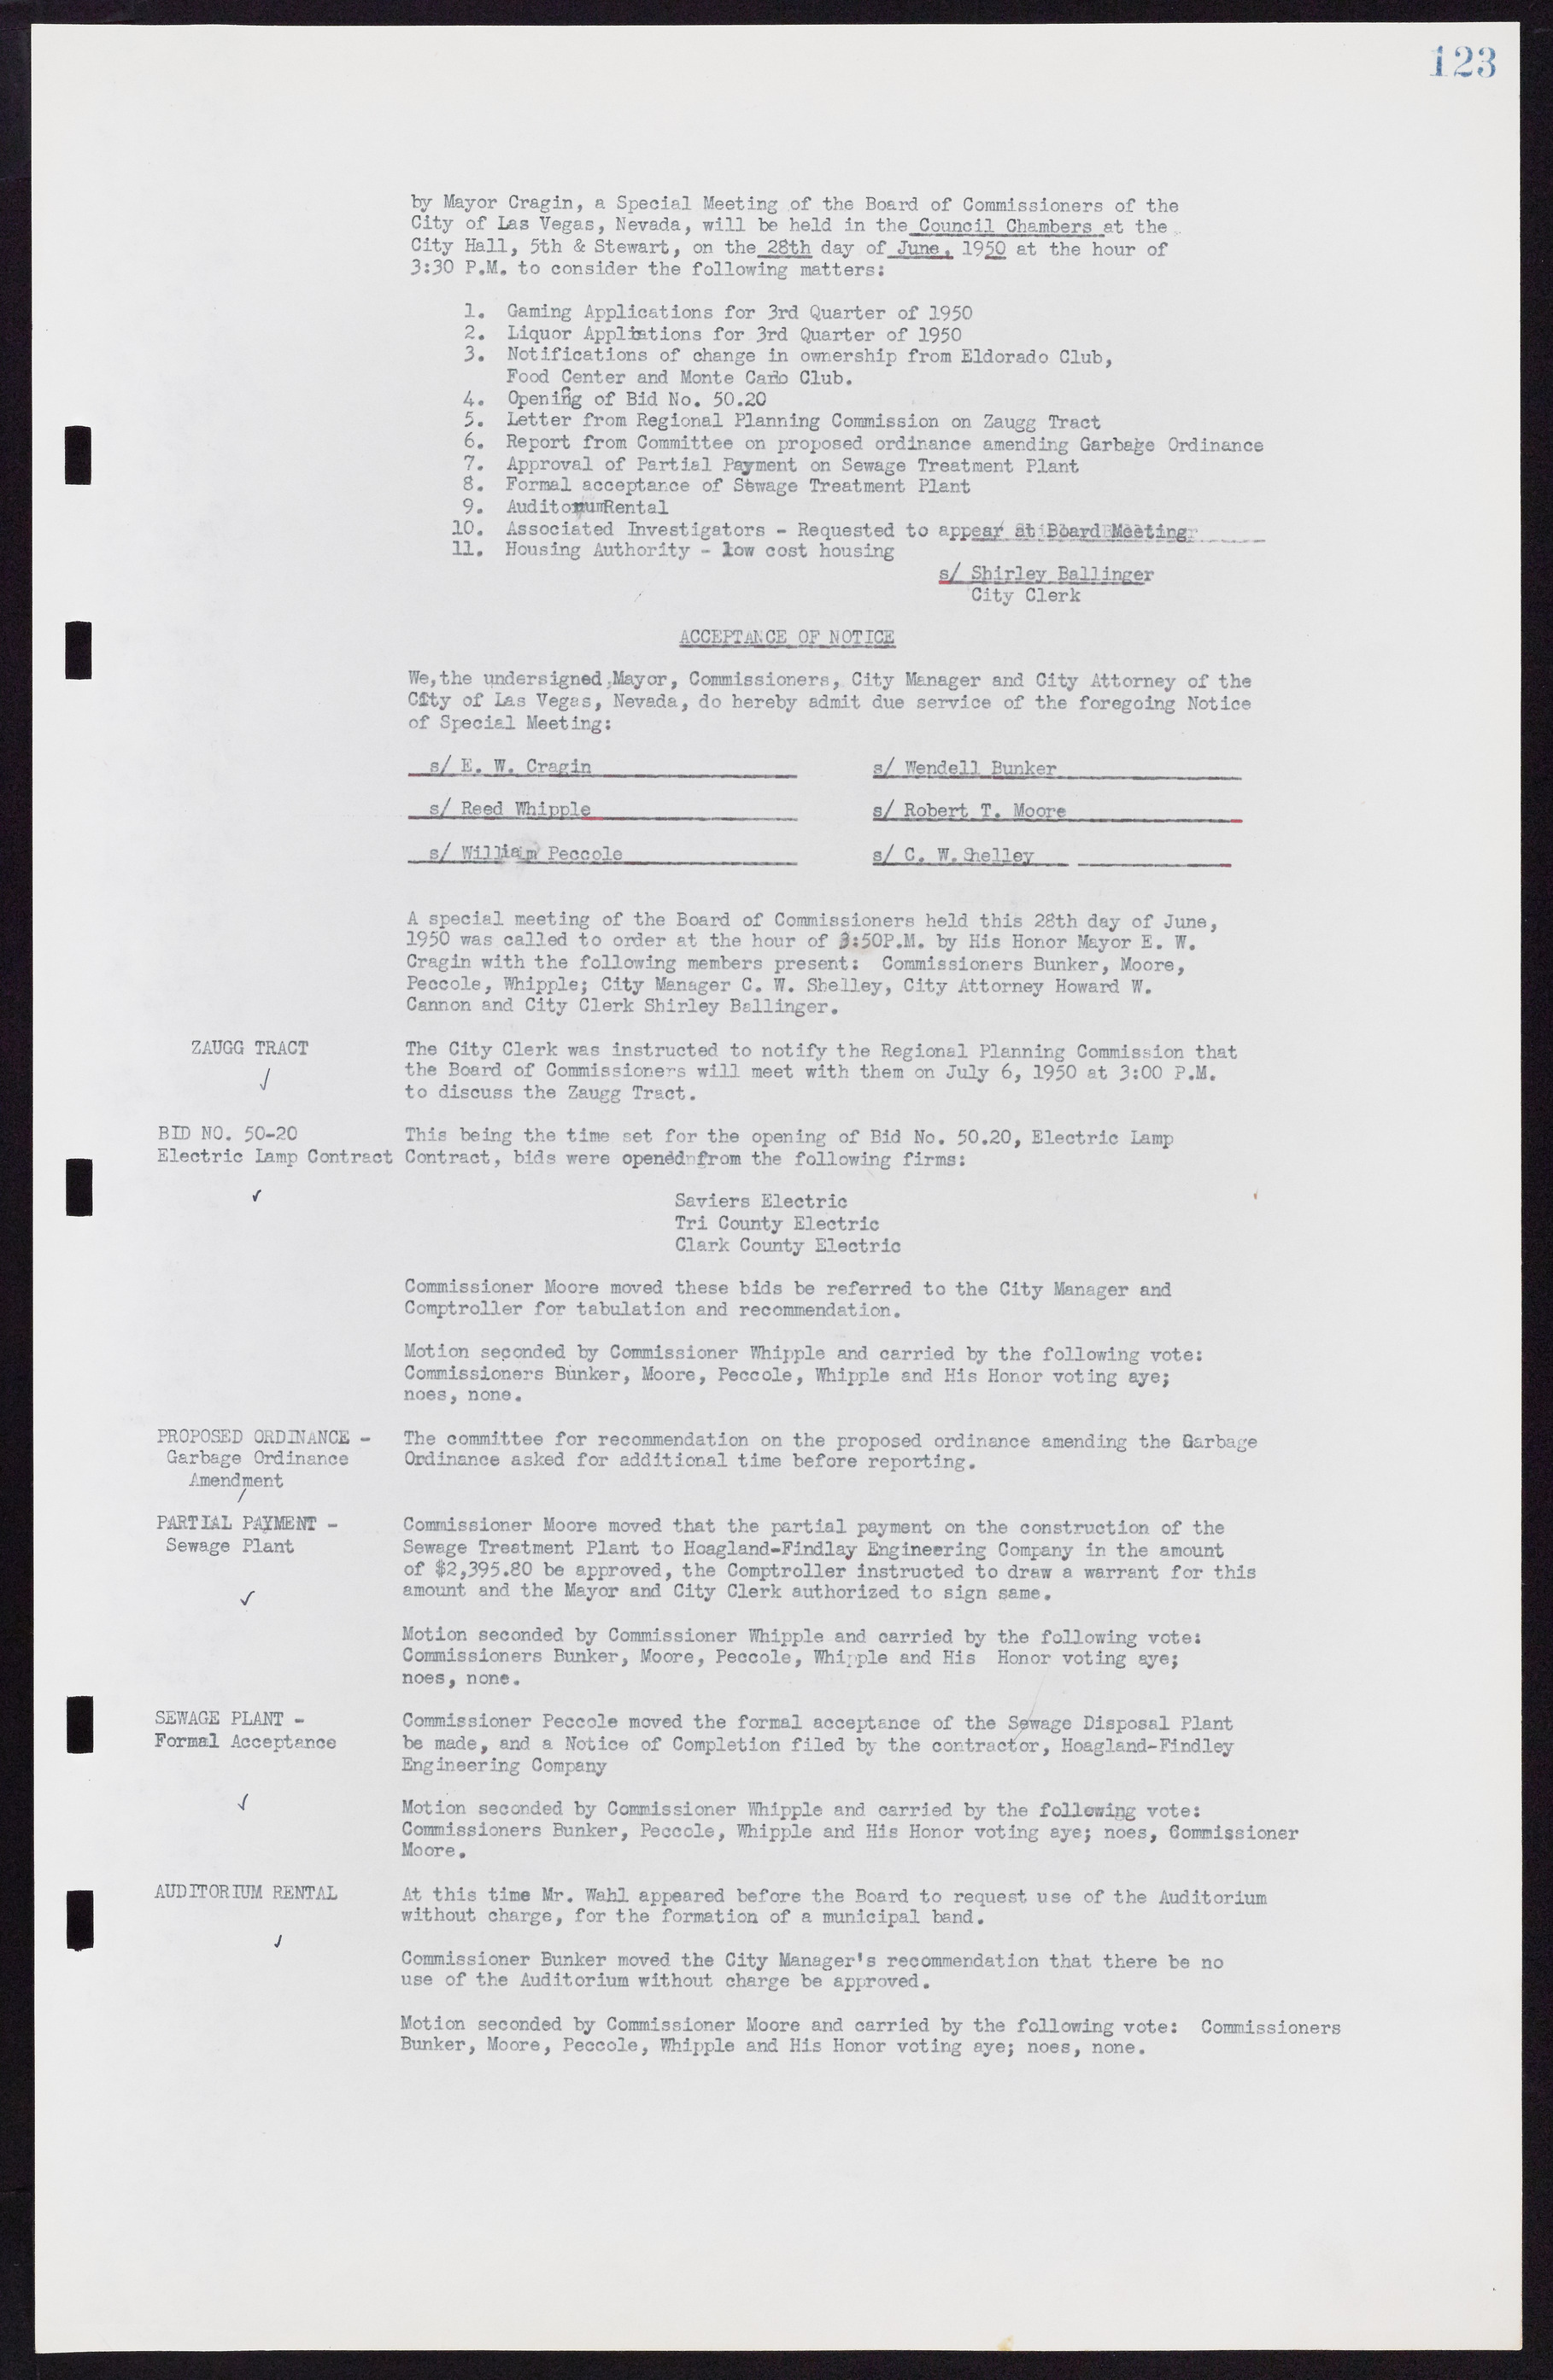 Las Vegas City Commission Minutes, November 7, 1949 to May 21, 1952, lvc000007-131